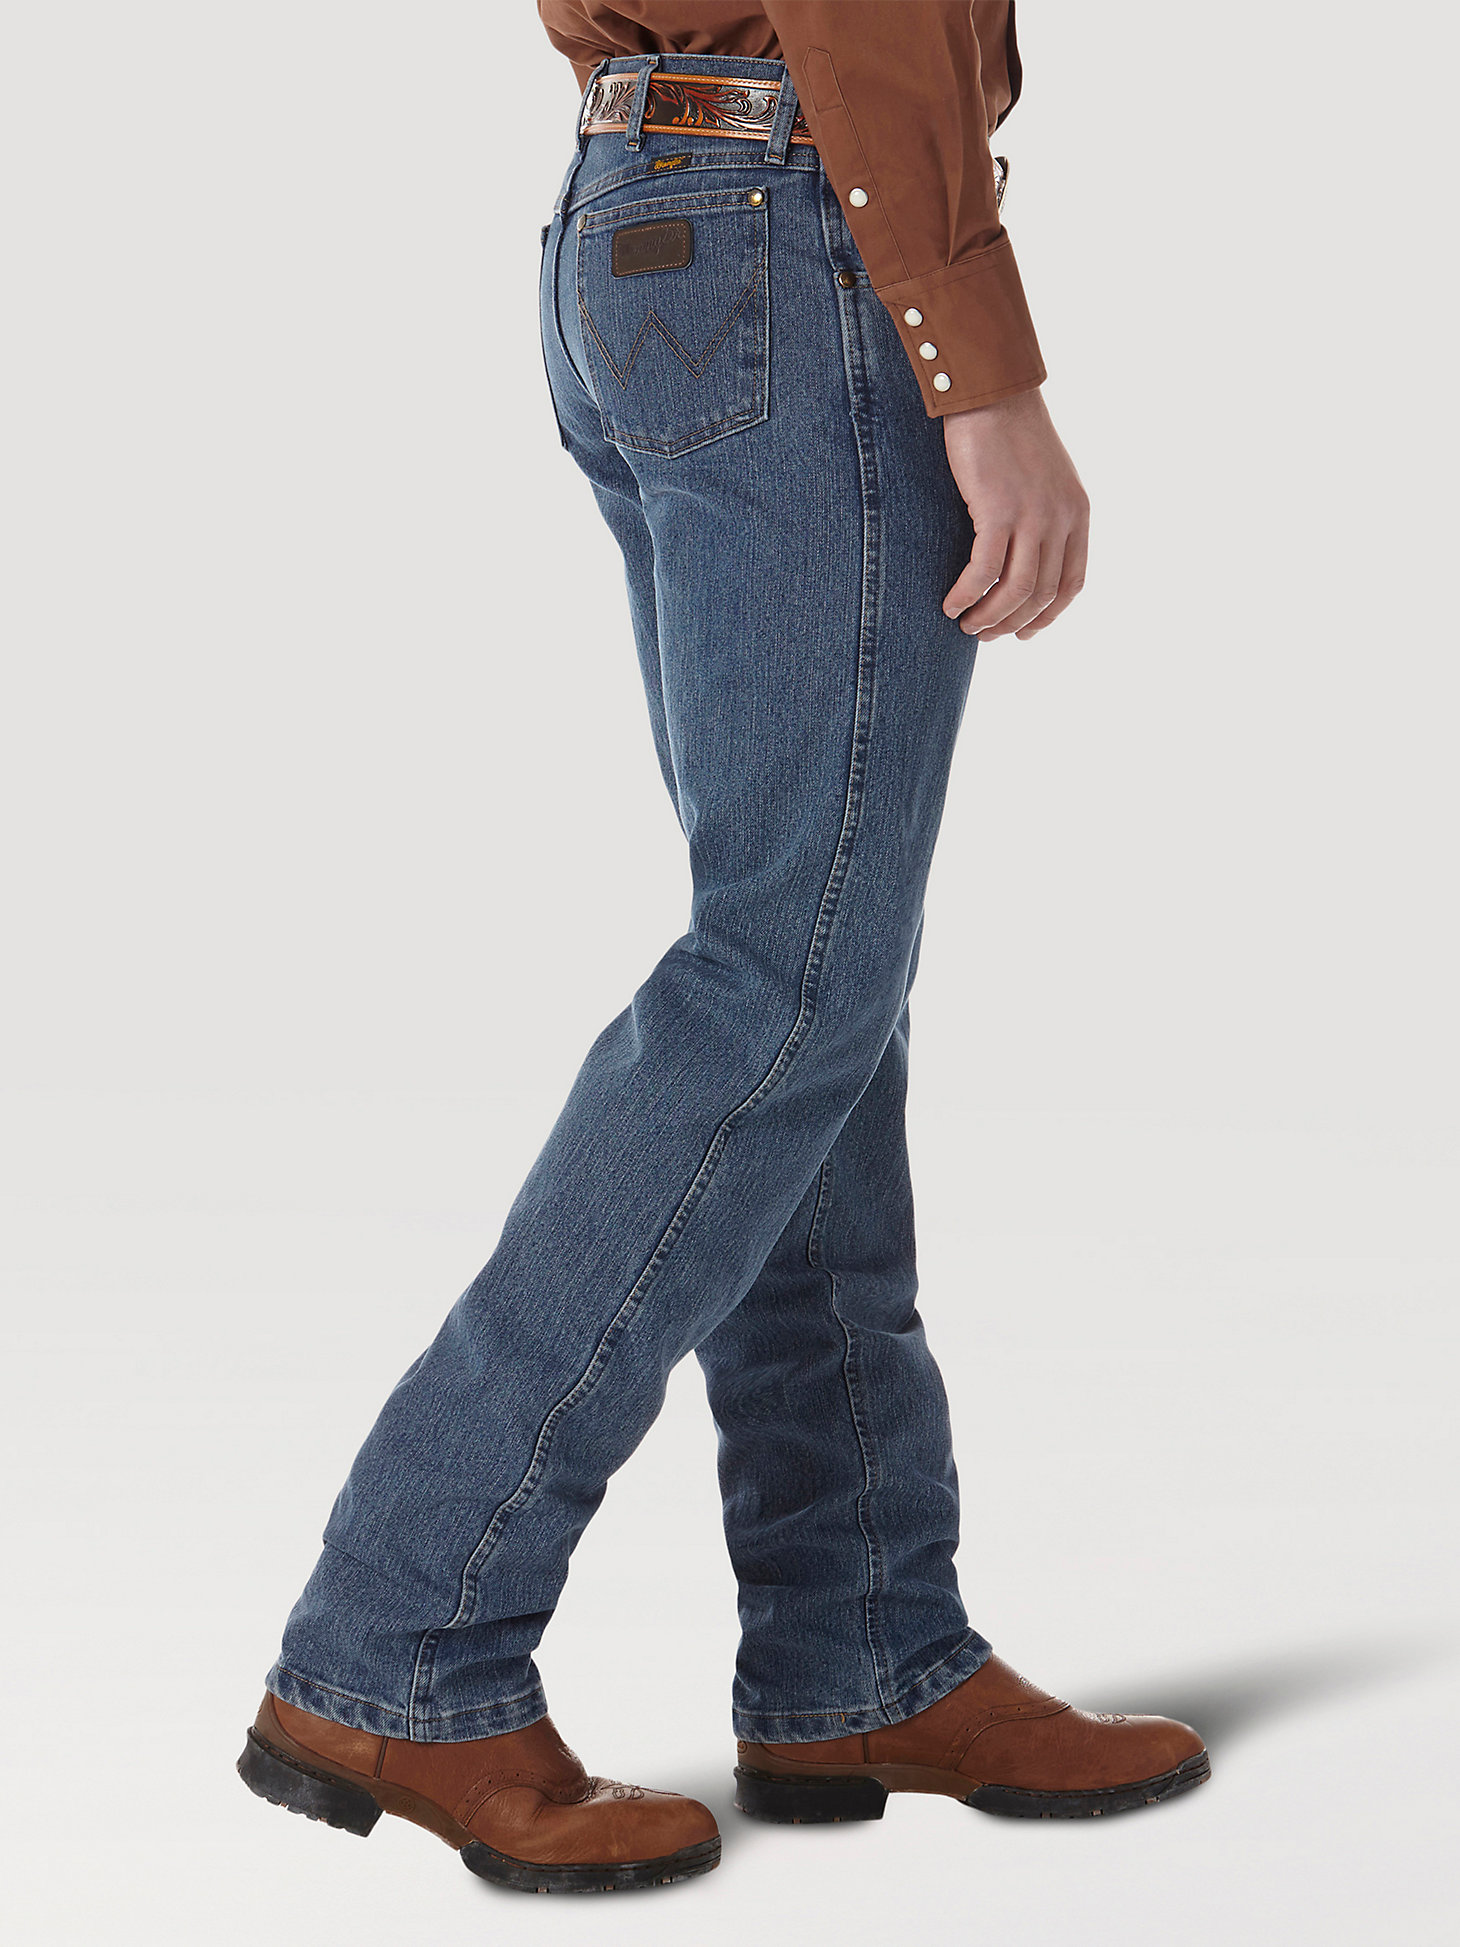 WRANGLER 47MWZBK Premium Performance Cowboy Cut® Regular Fit Jeans 